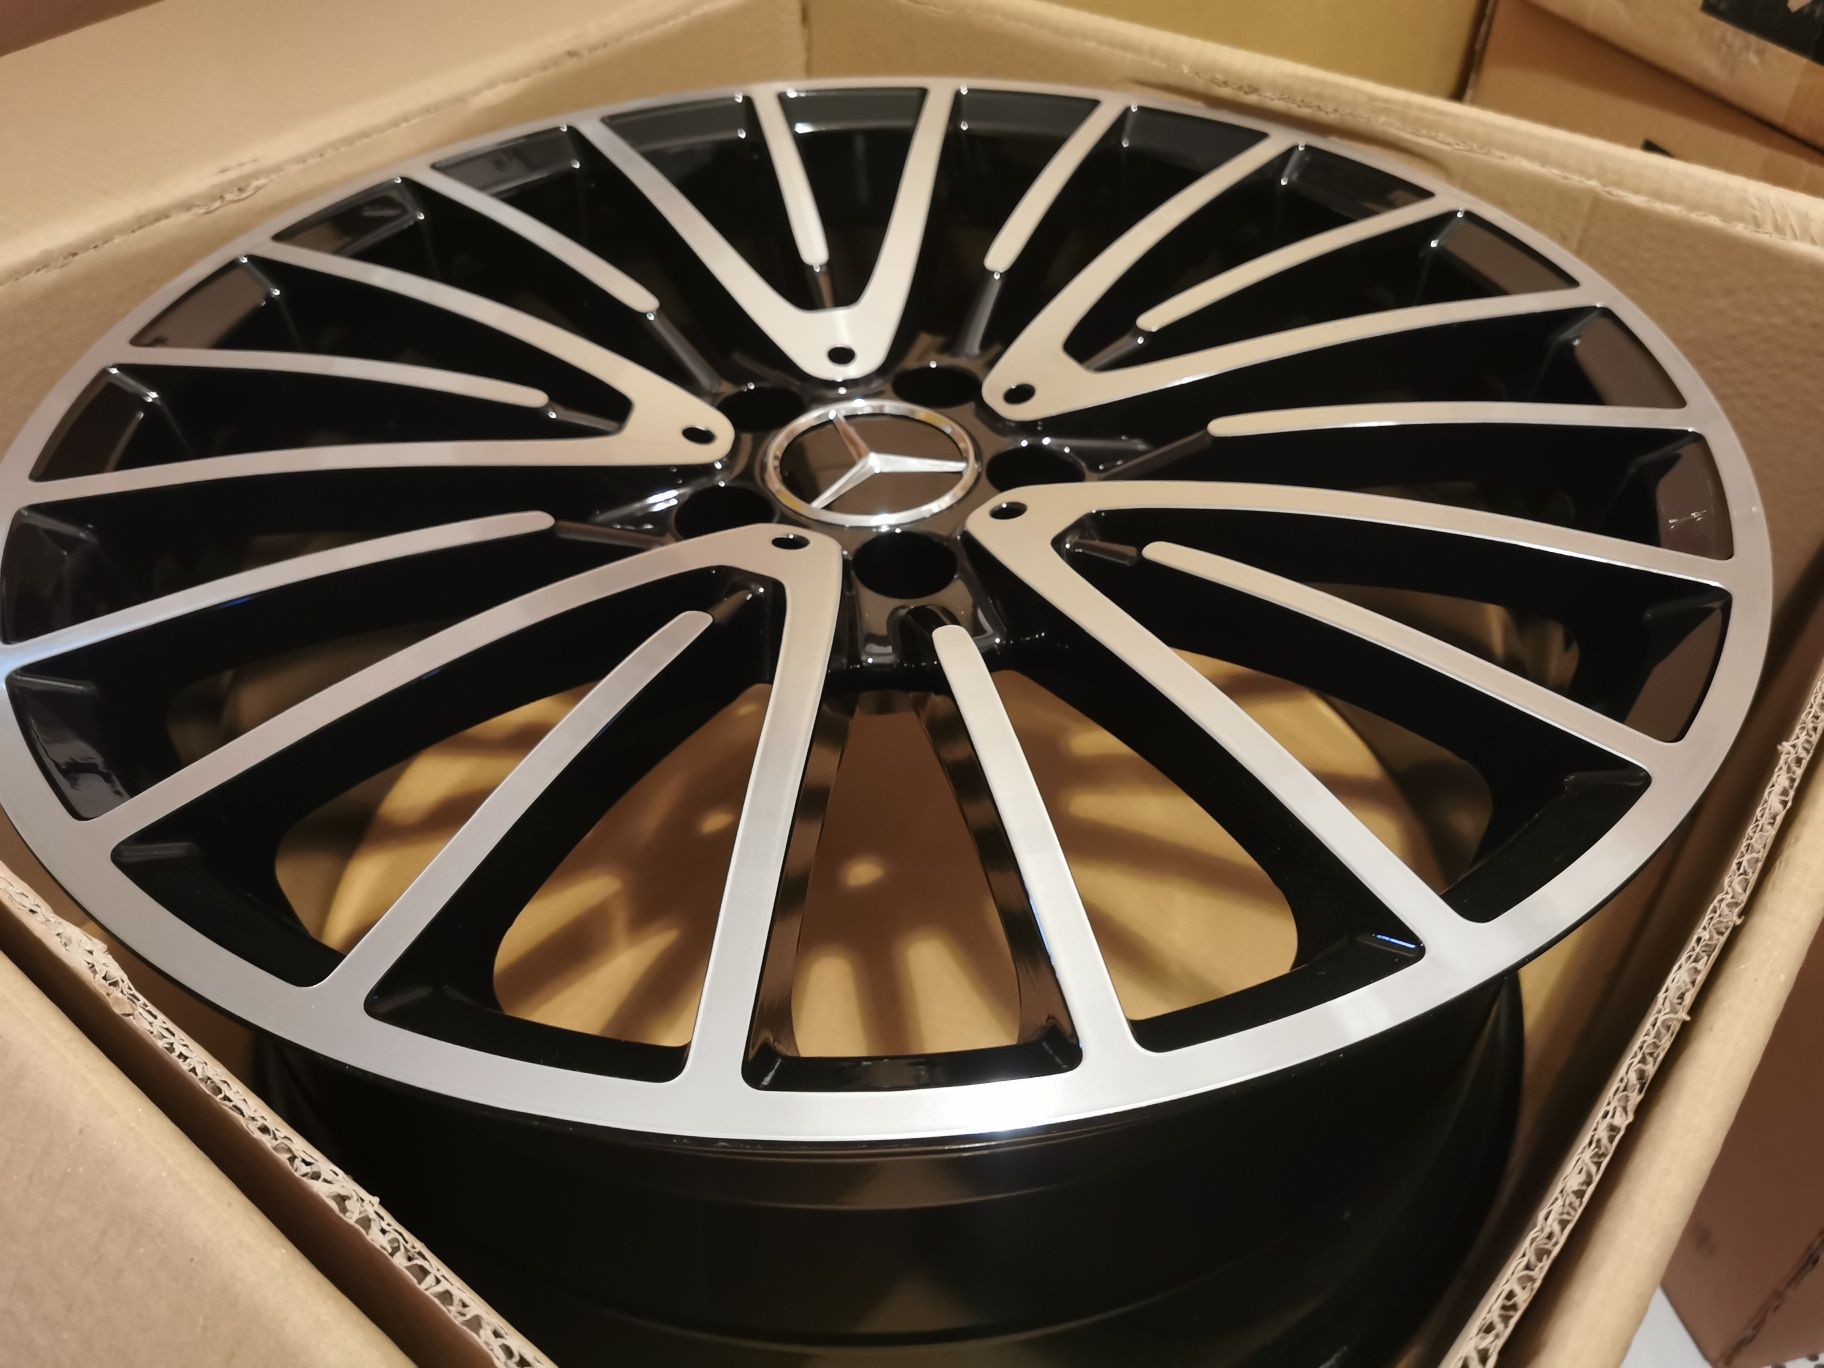 Vand jante de aliaj pentru Mercedes pe 20 marca Rc wheels